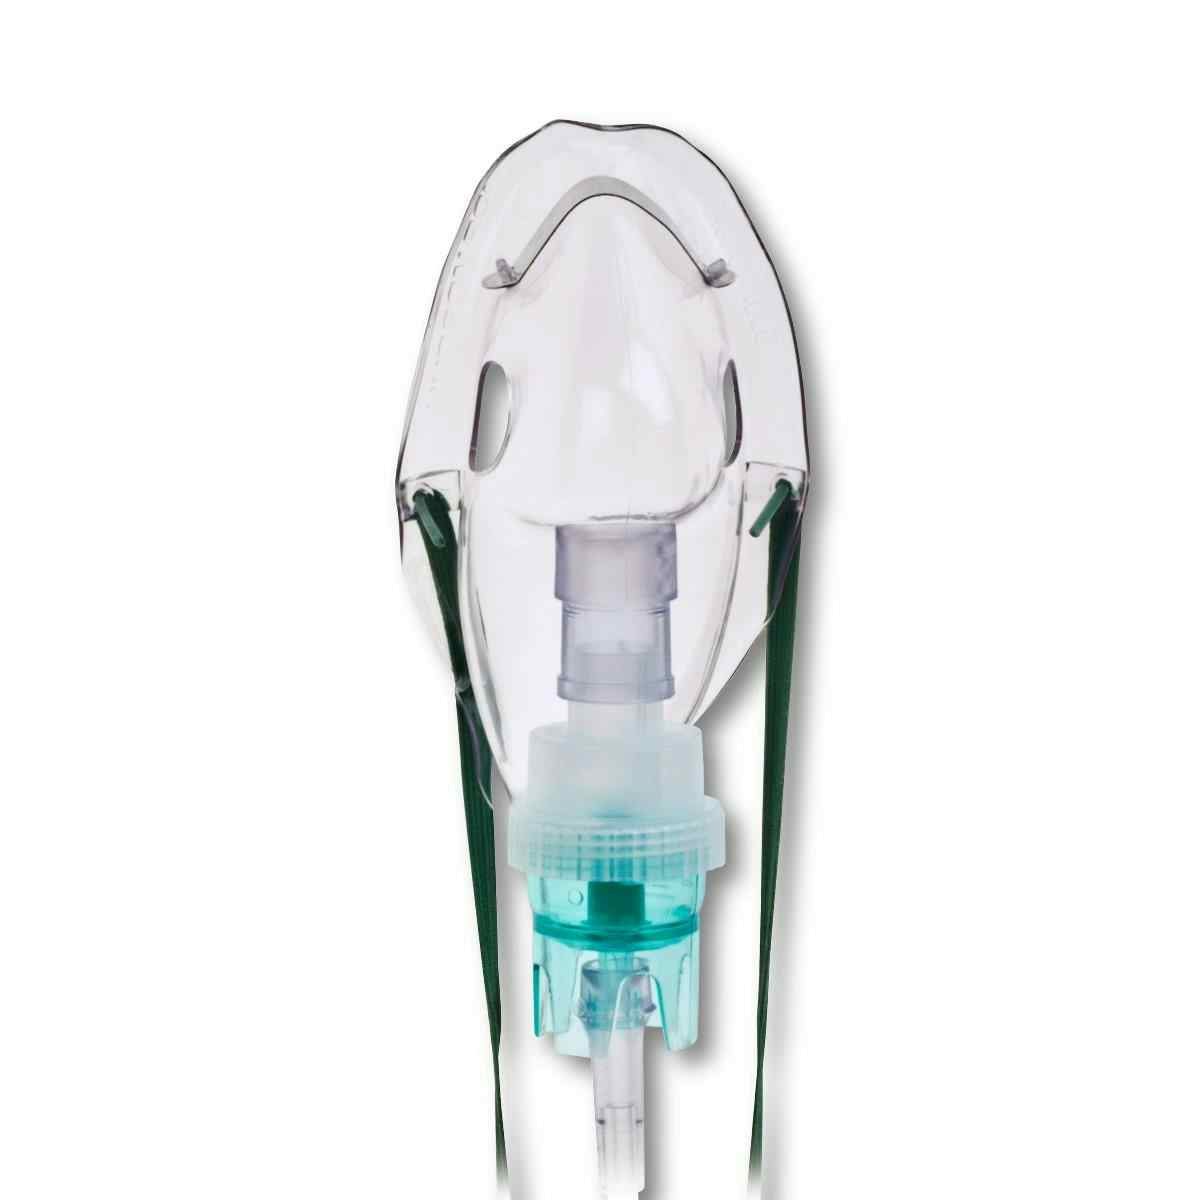 Medline Up-Draft II Opti-Neb Nebulizer, 7' Star Lumen Oxygen Tubing, Standard Connector, Elongated Adult Mask, HUDRHS705U, 1 Each